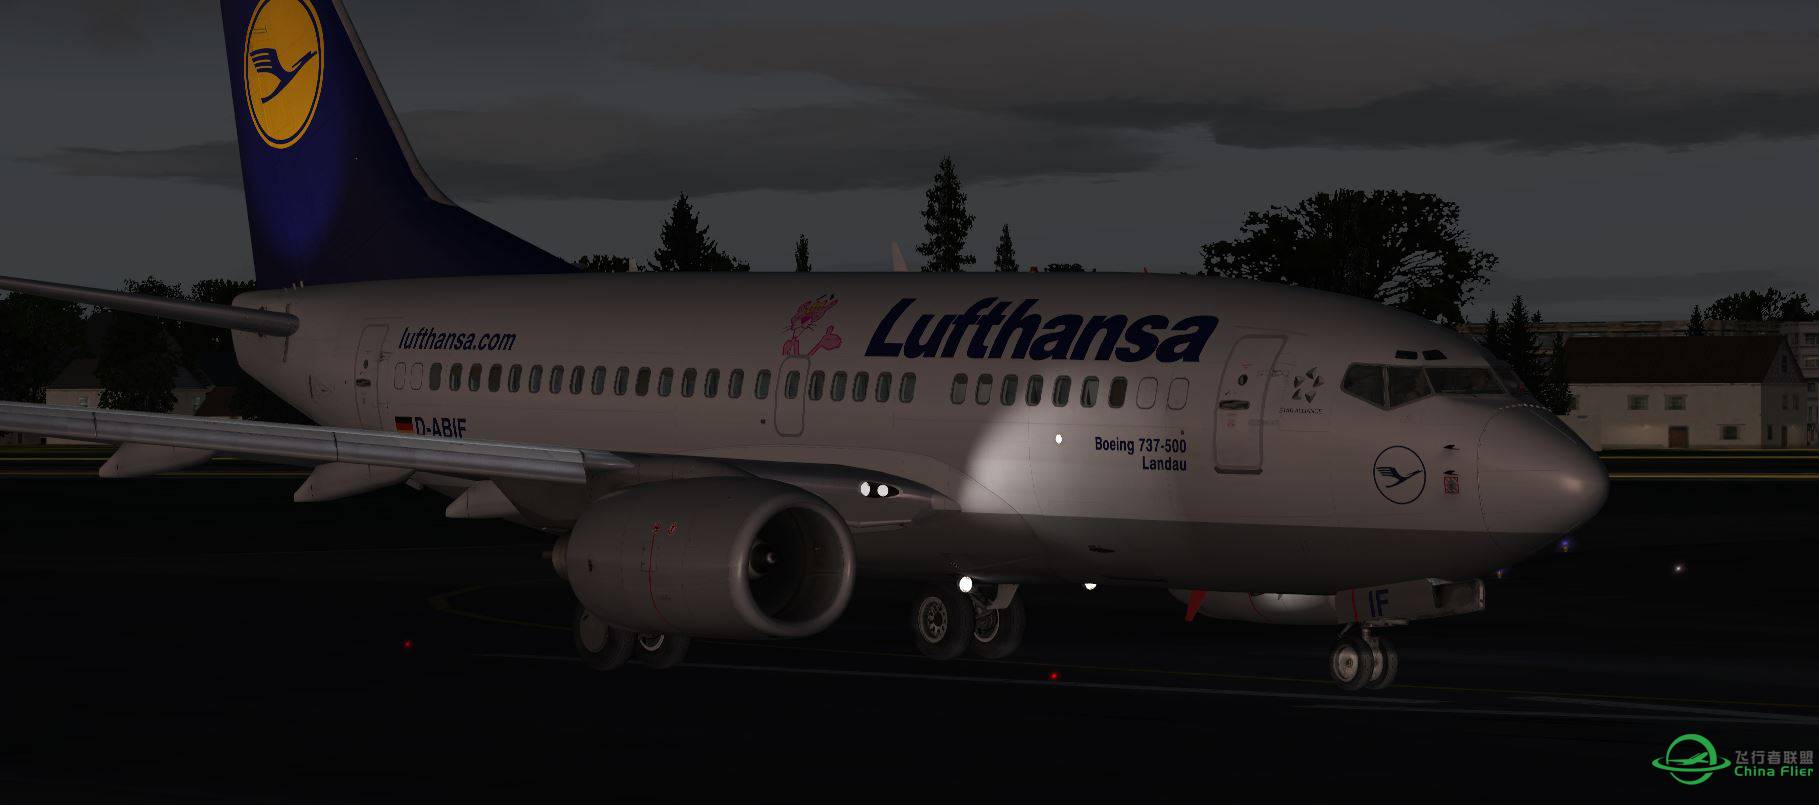 B737 Lufthansa-7414 